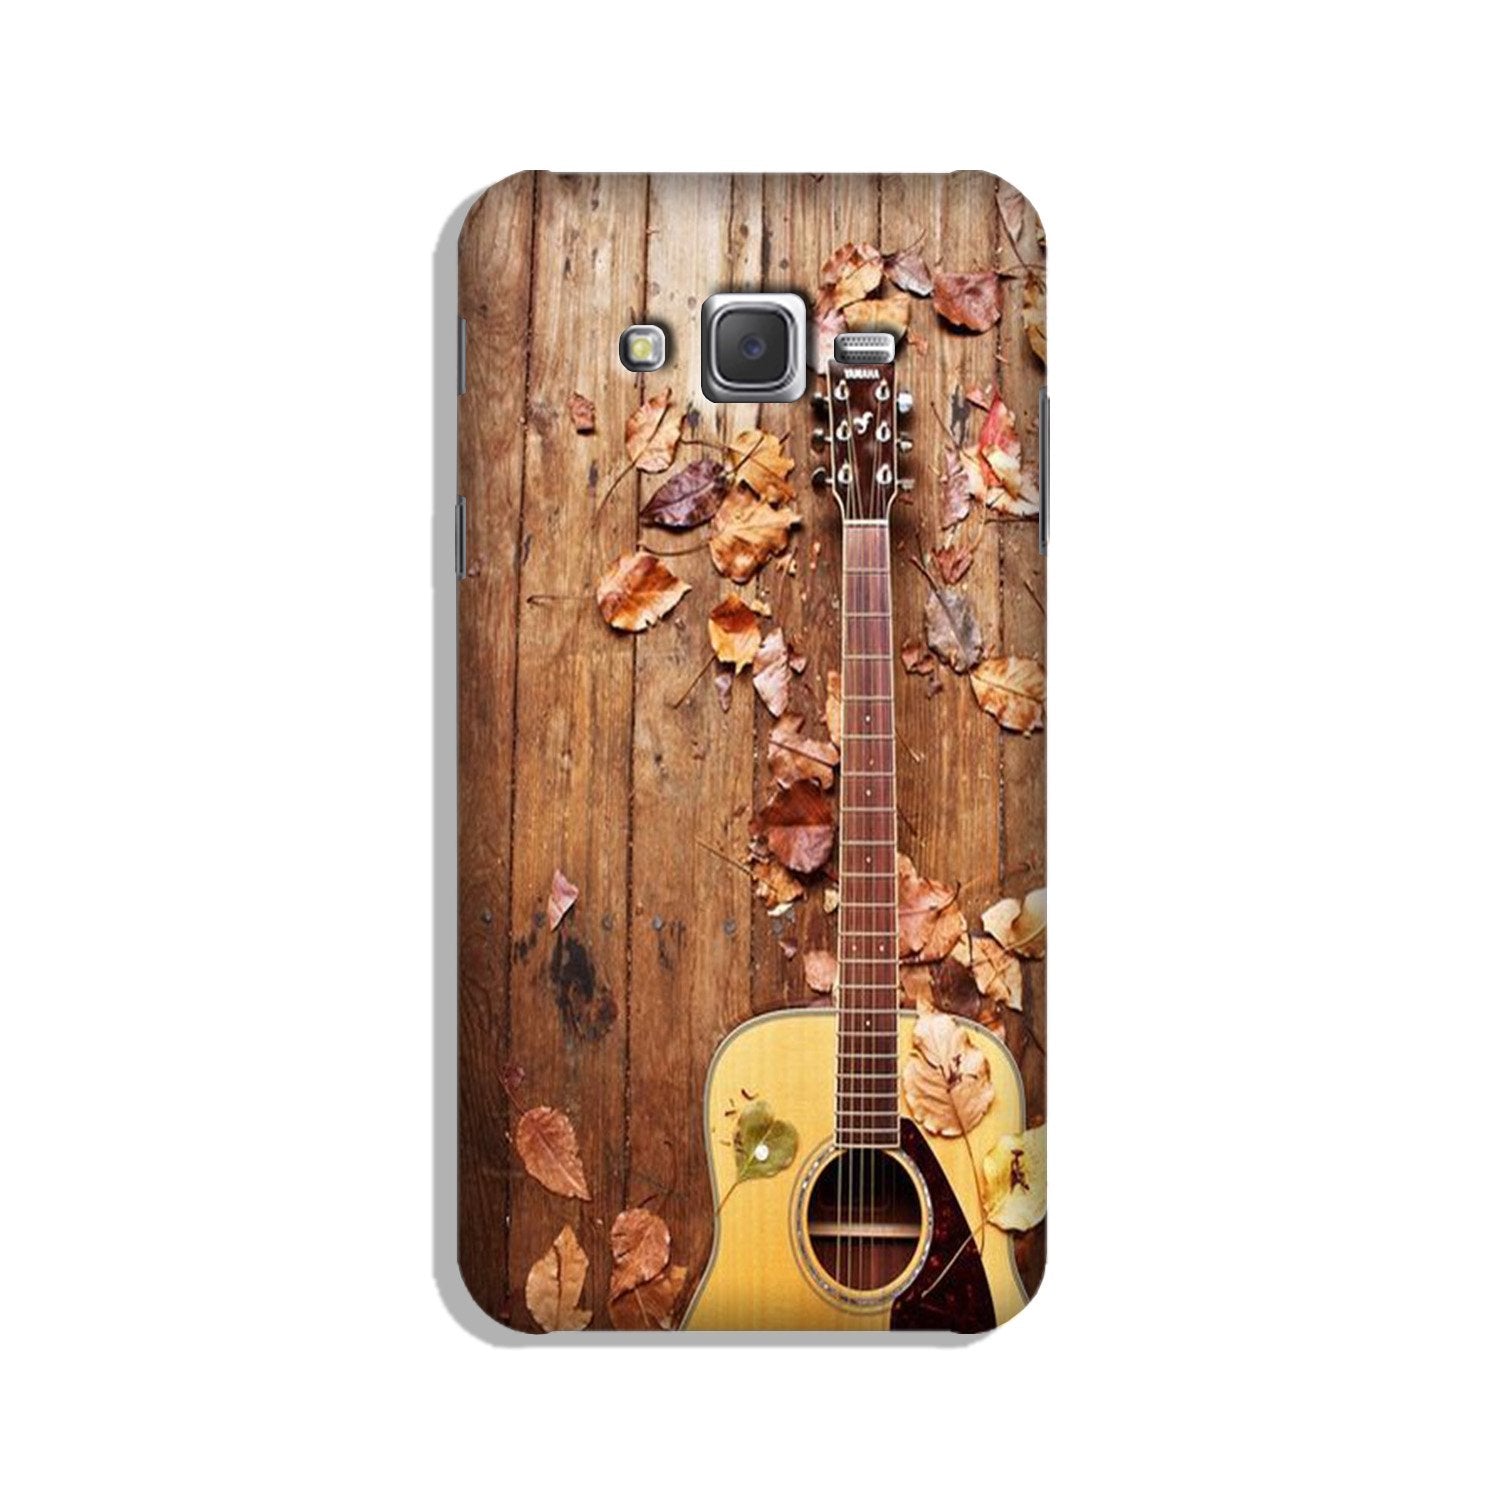 Guitar Case for Galaxy J5 (2015)